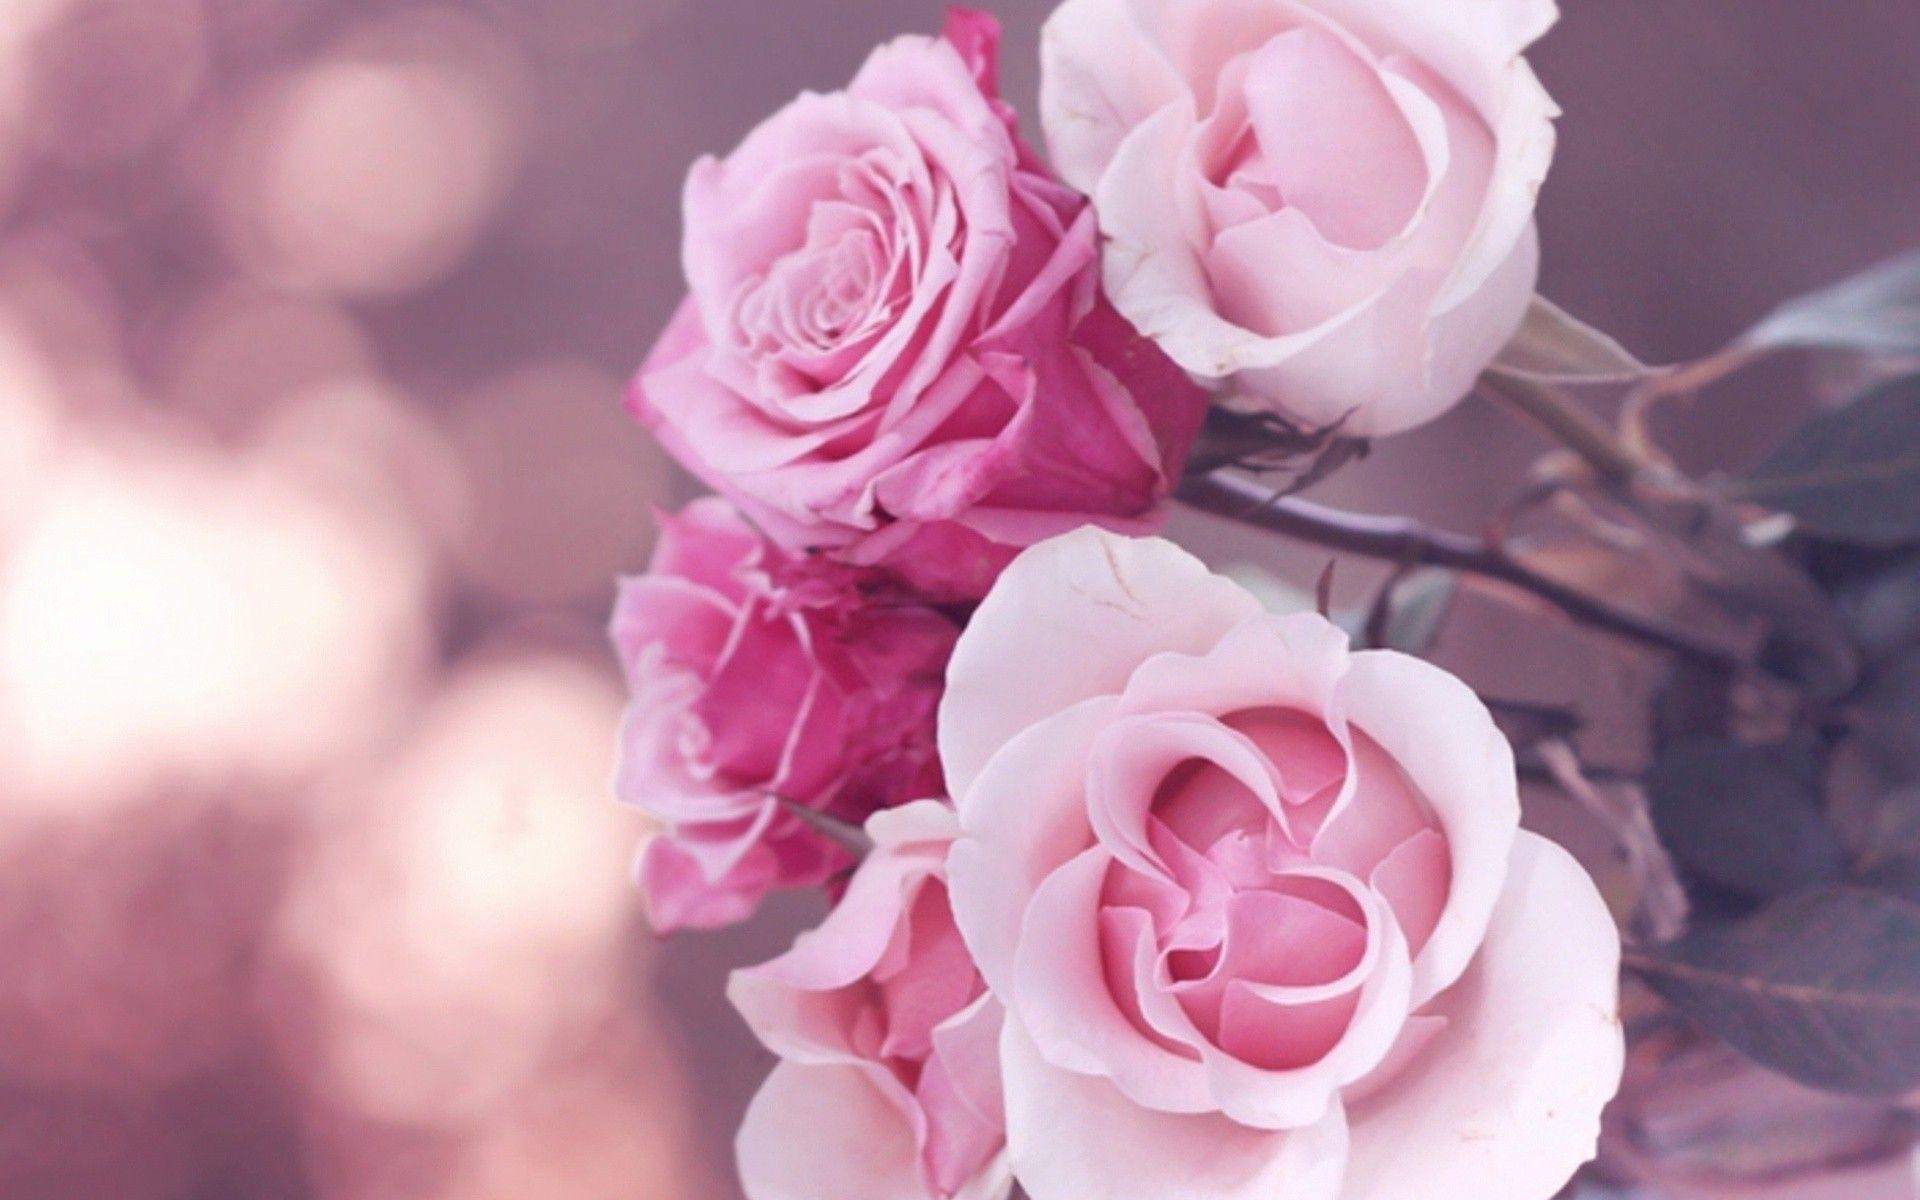 Flowers roses pink rose wallpaper. PC